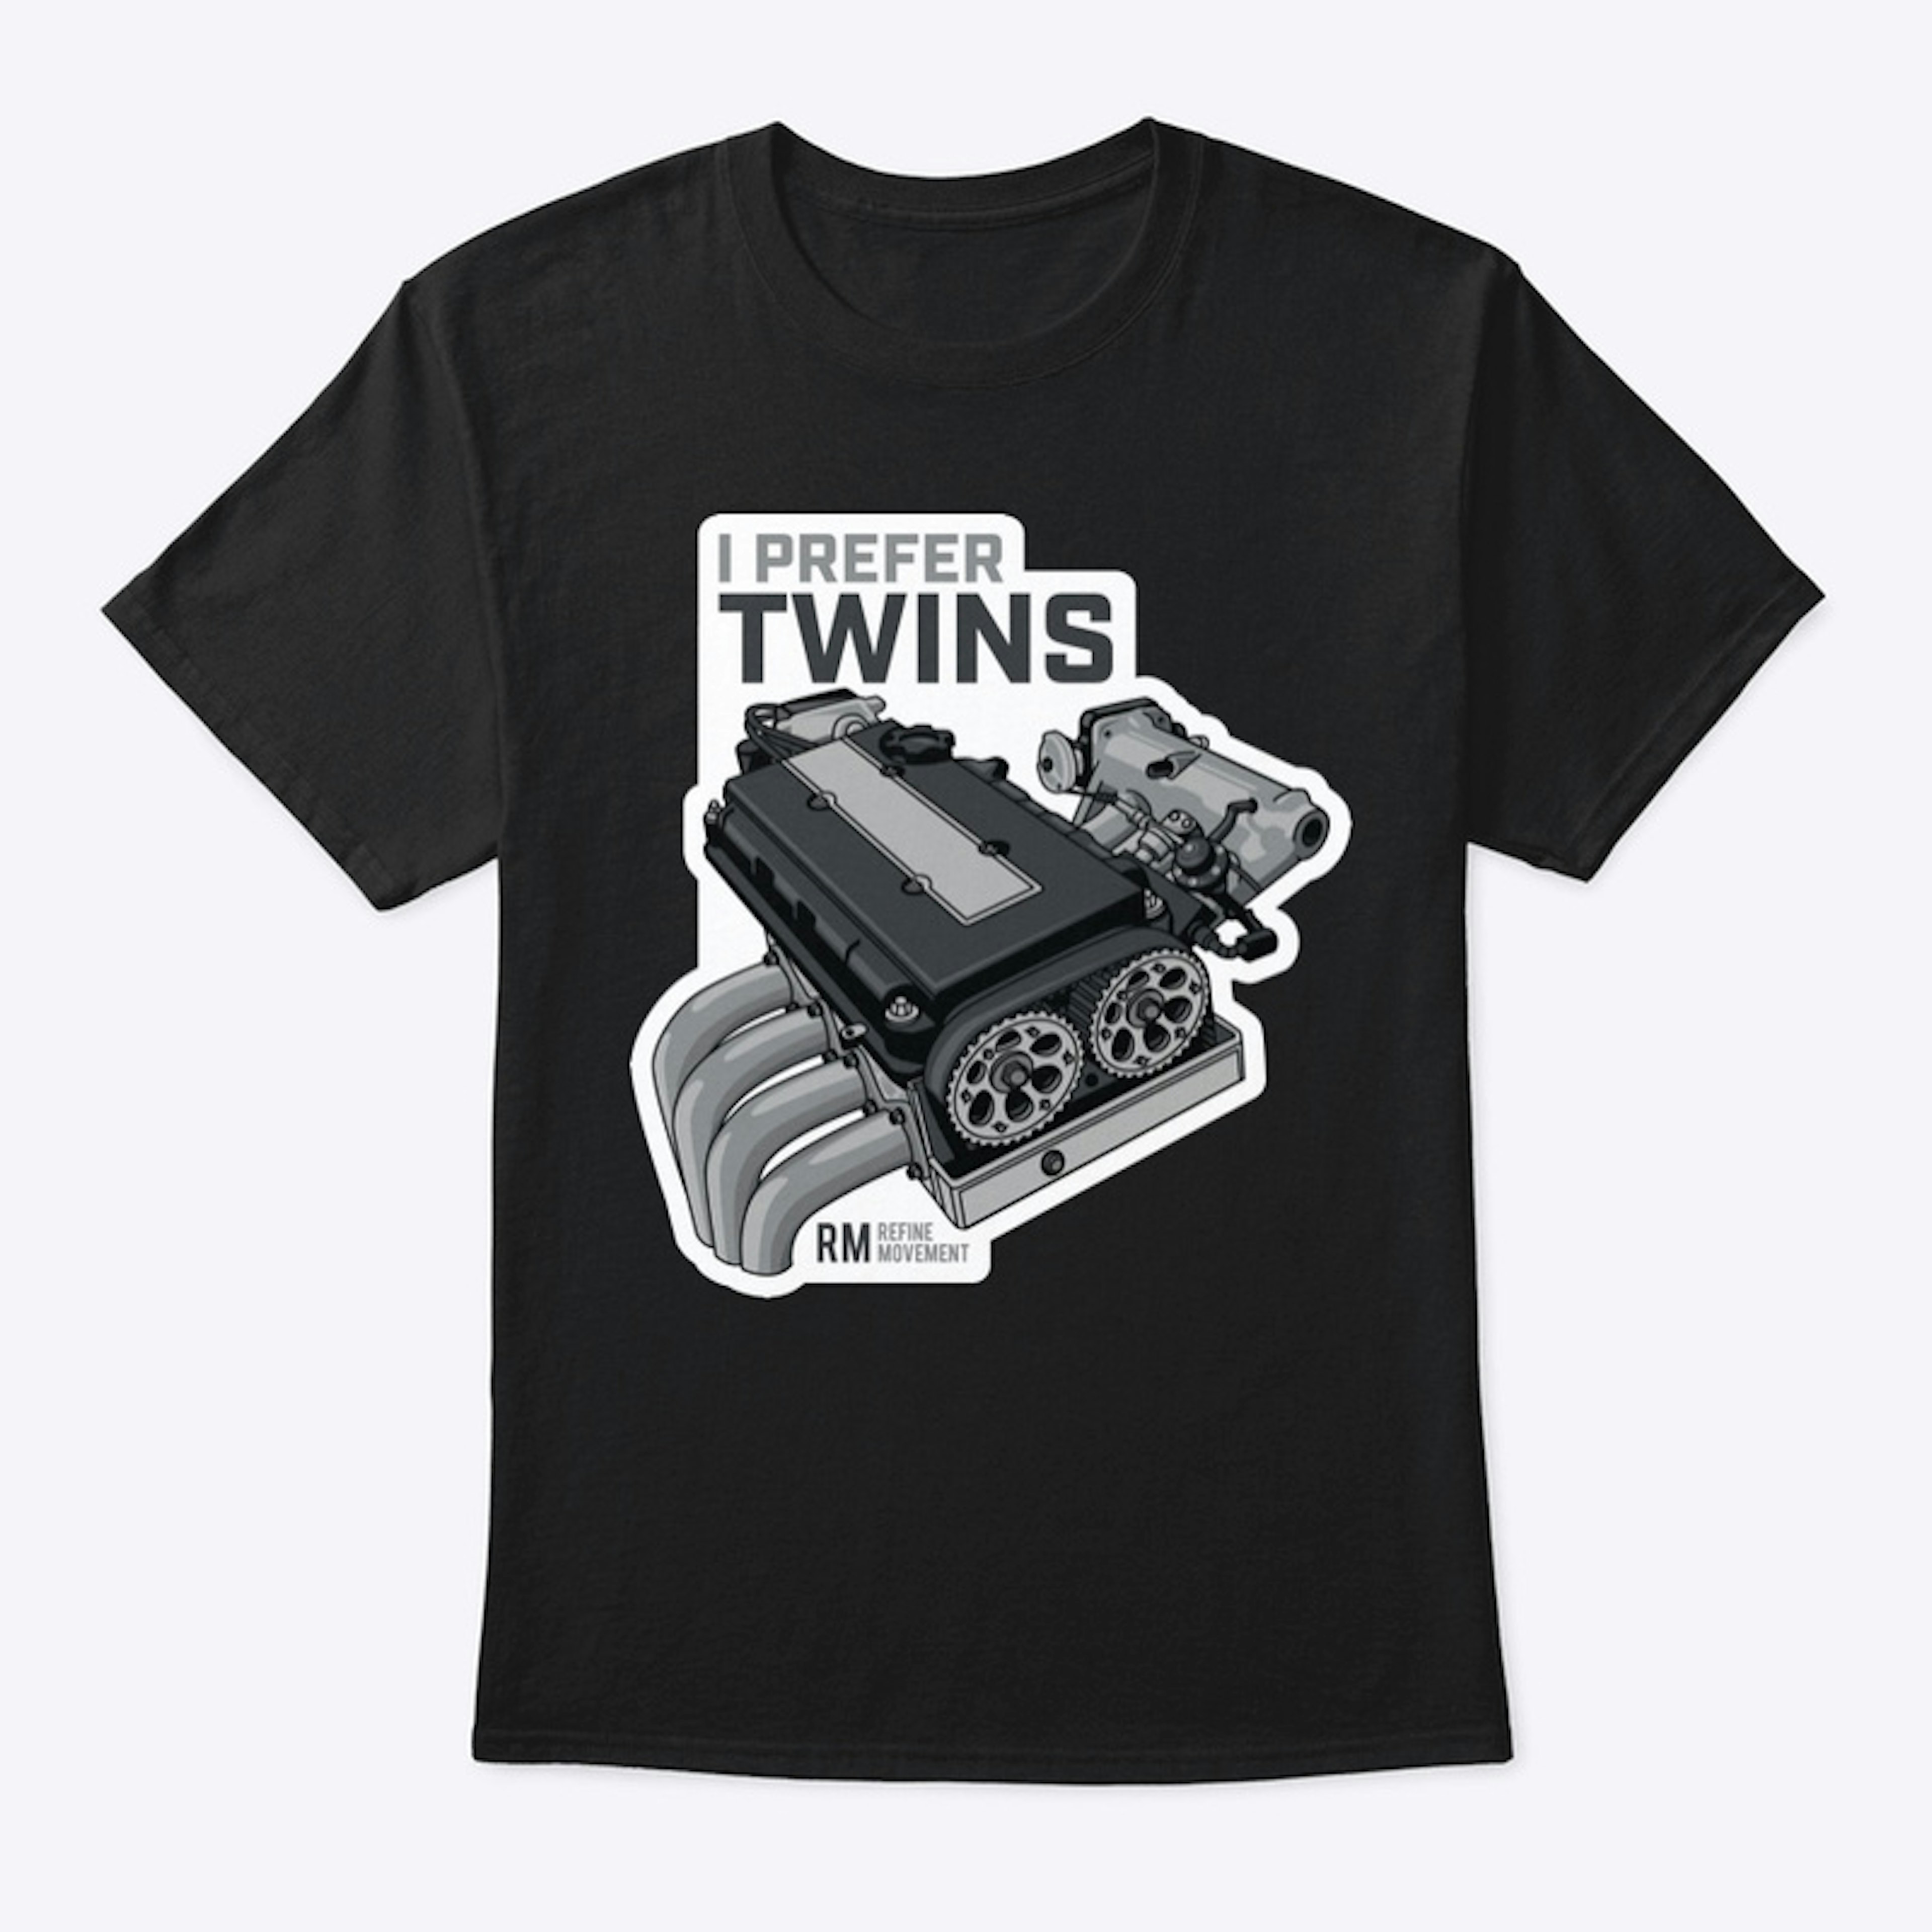 I Prefer Twins B Series T-Shirt